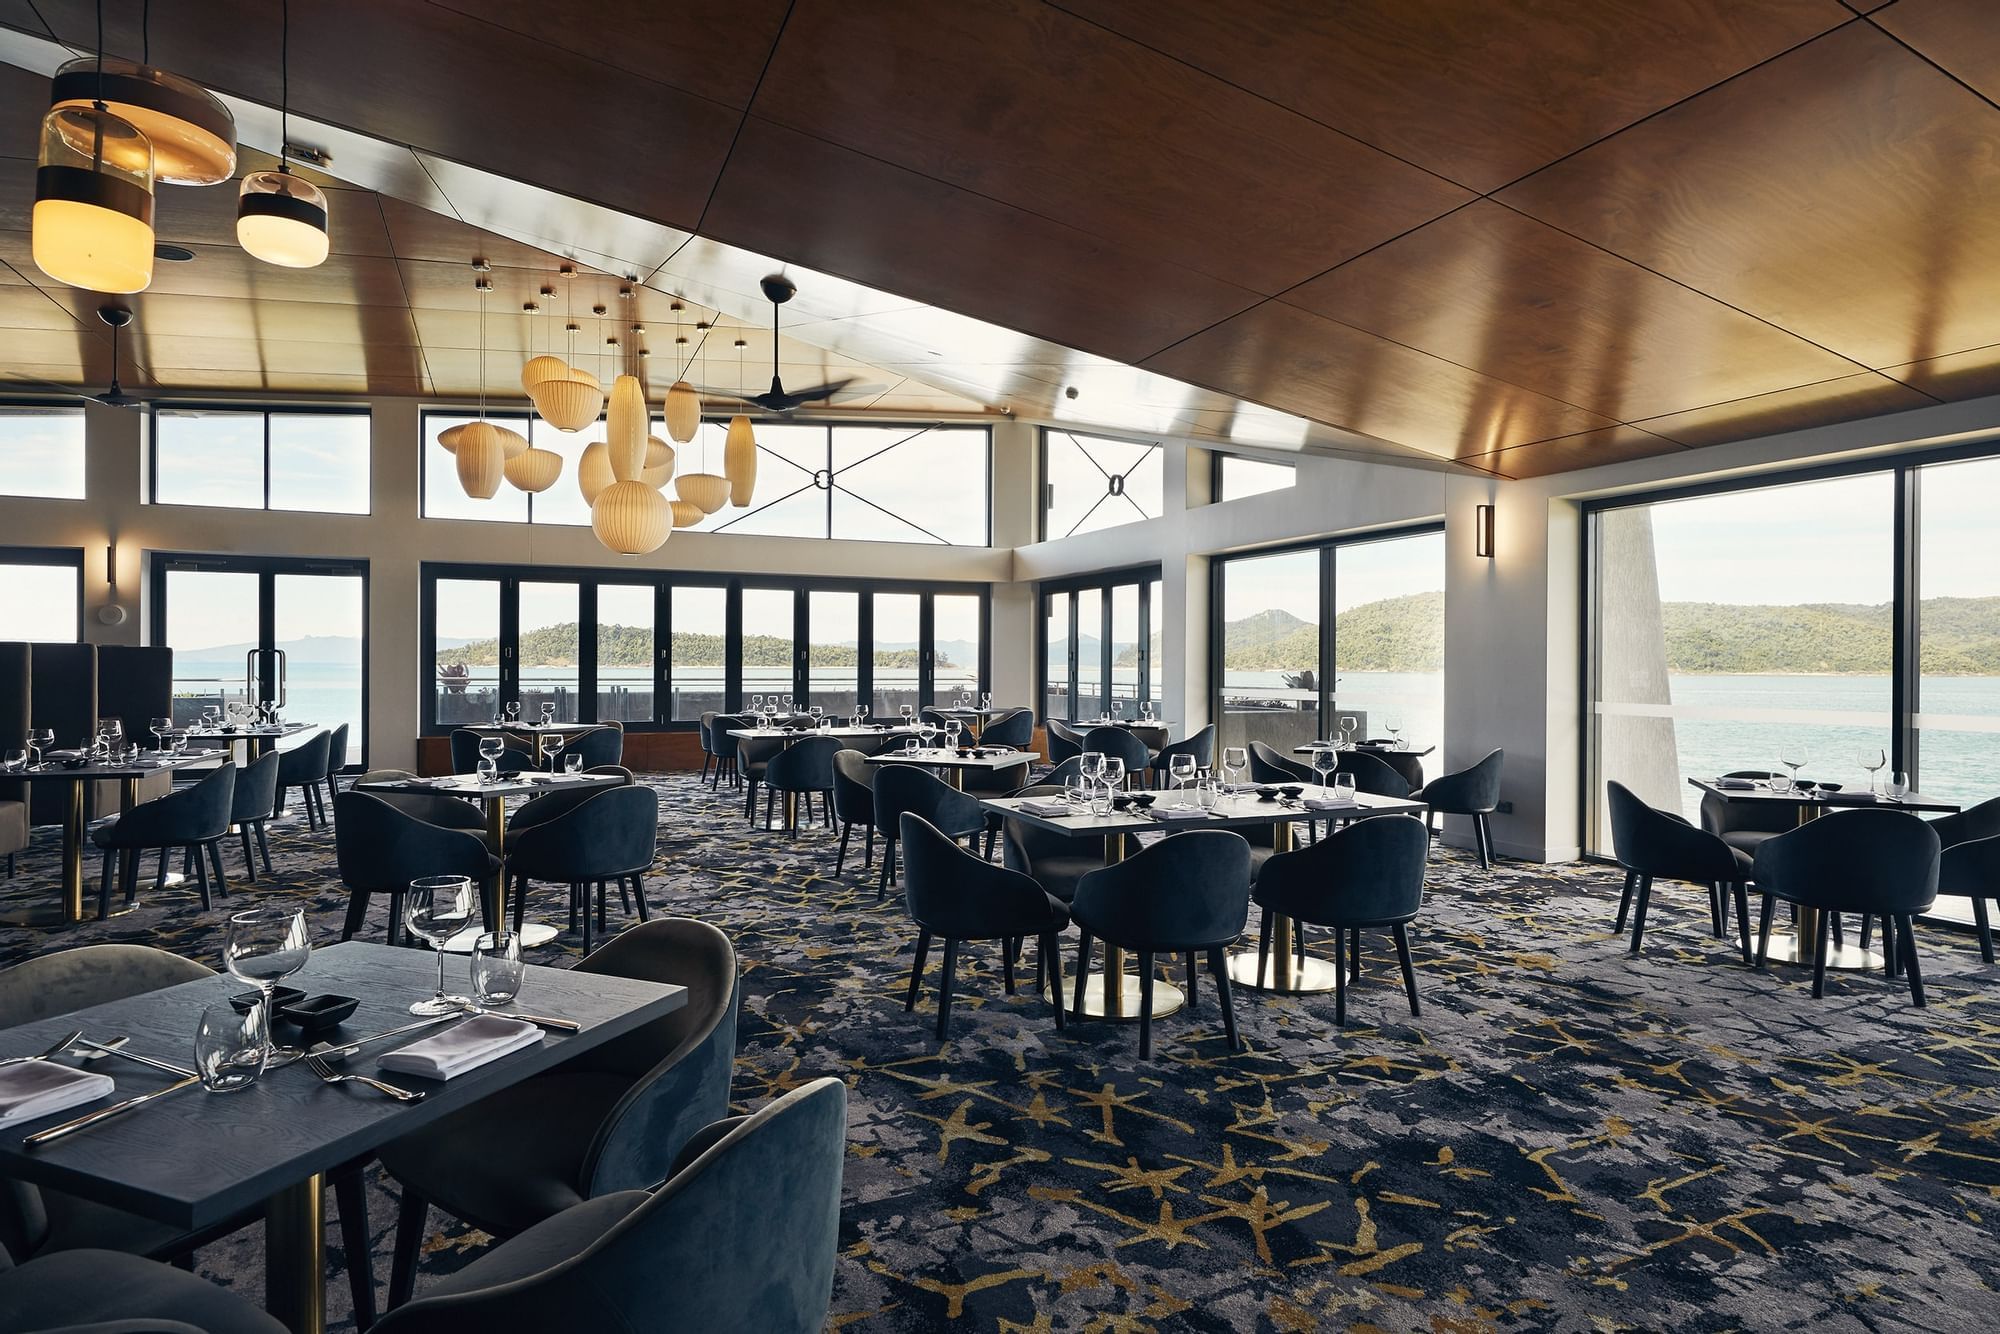 Infinity Restaurant dining area at Daydream Island Resort